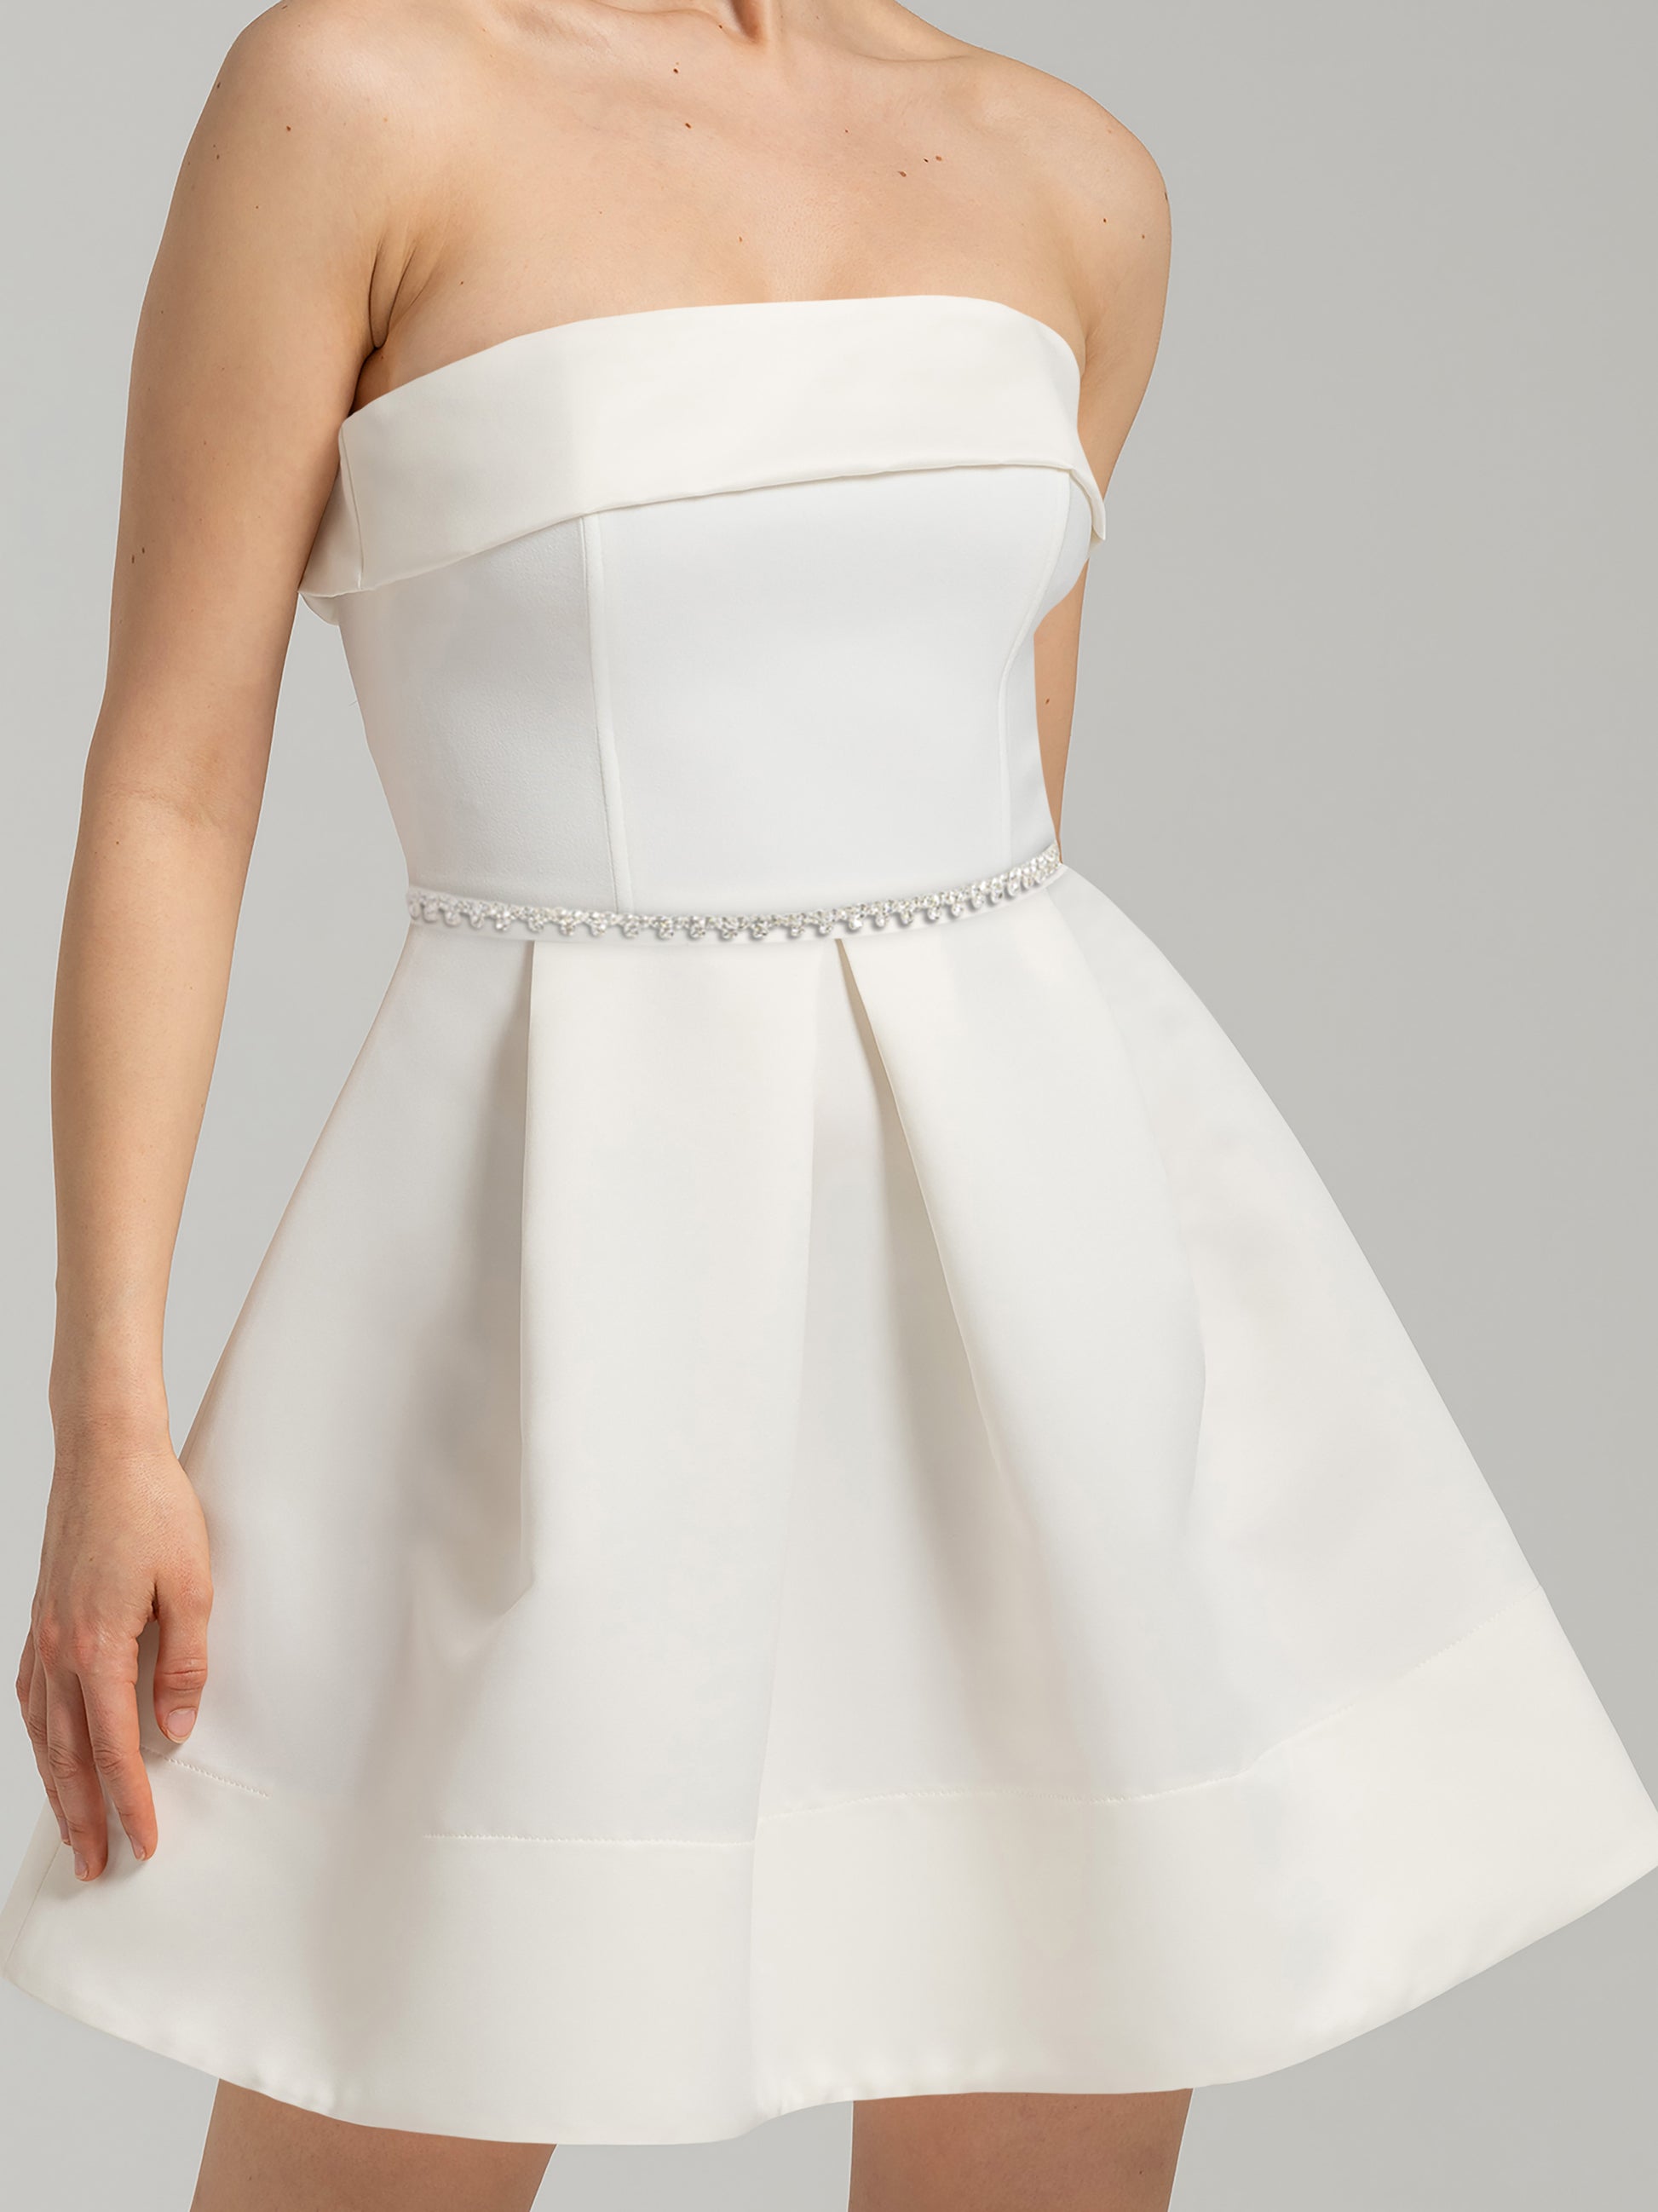 Wild Flower Mini Dress with Crystal Belt - Pearl White by Tia Dorraine Women's Luxury Fashion Designer Clothing Brand